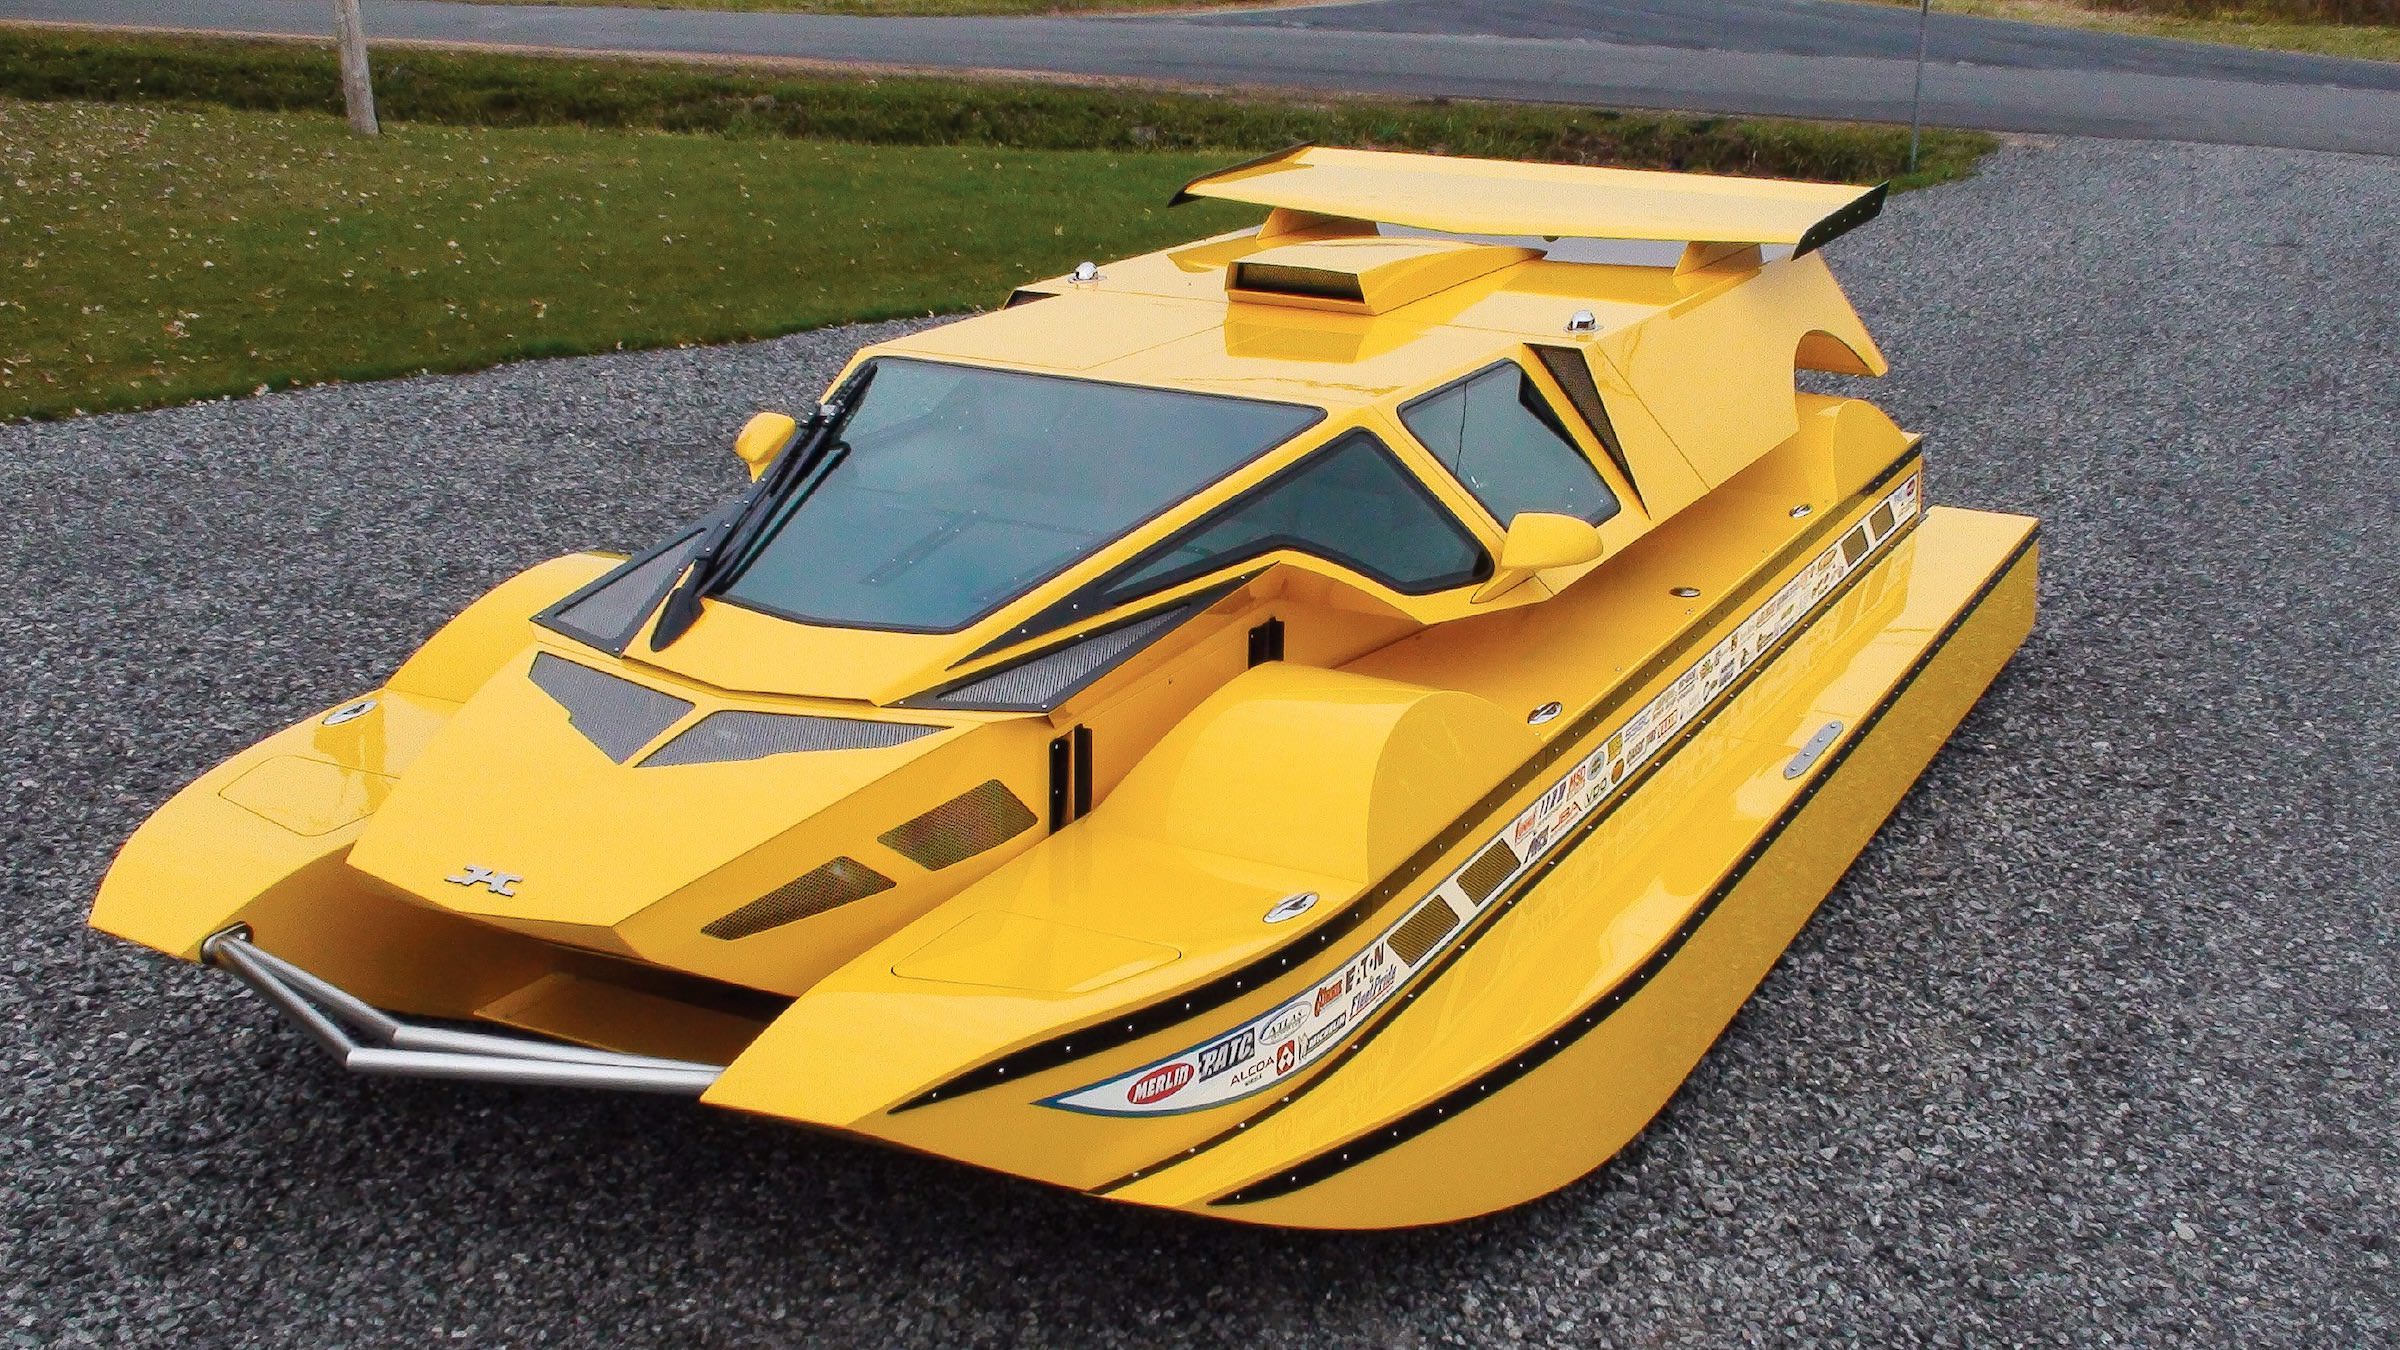 The Amphibious Dobbertin HydroCar - A $1 Million Dollar 762 HP Boat/Car Hybrid